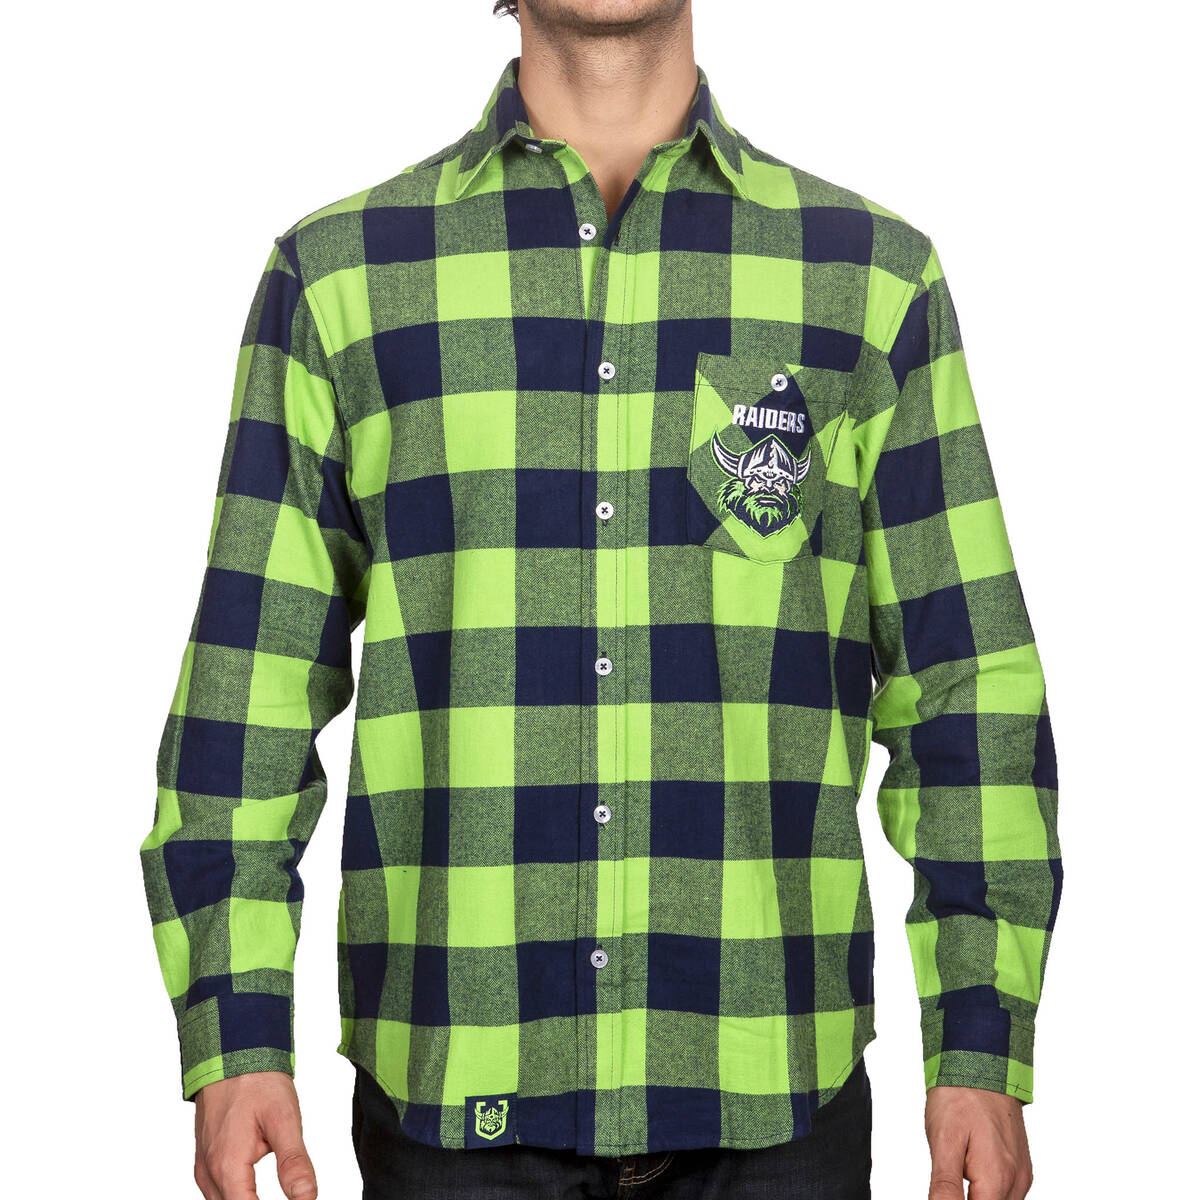 Raiders Lumberjack Flannel Shirt0